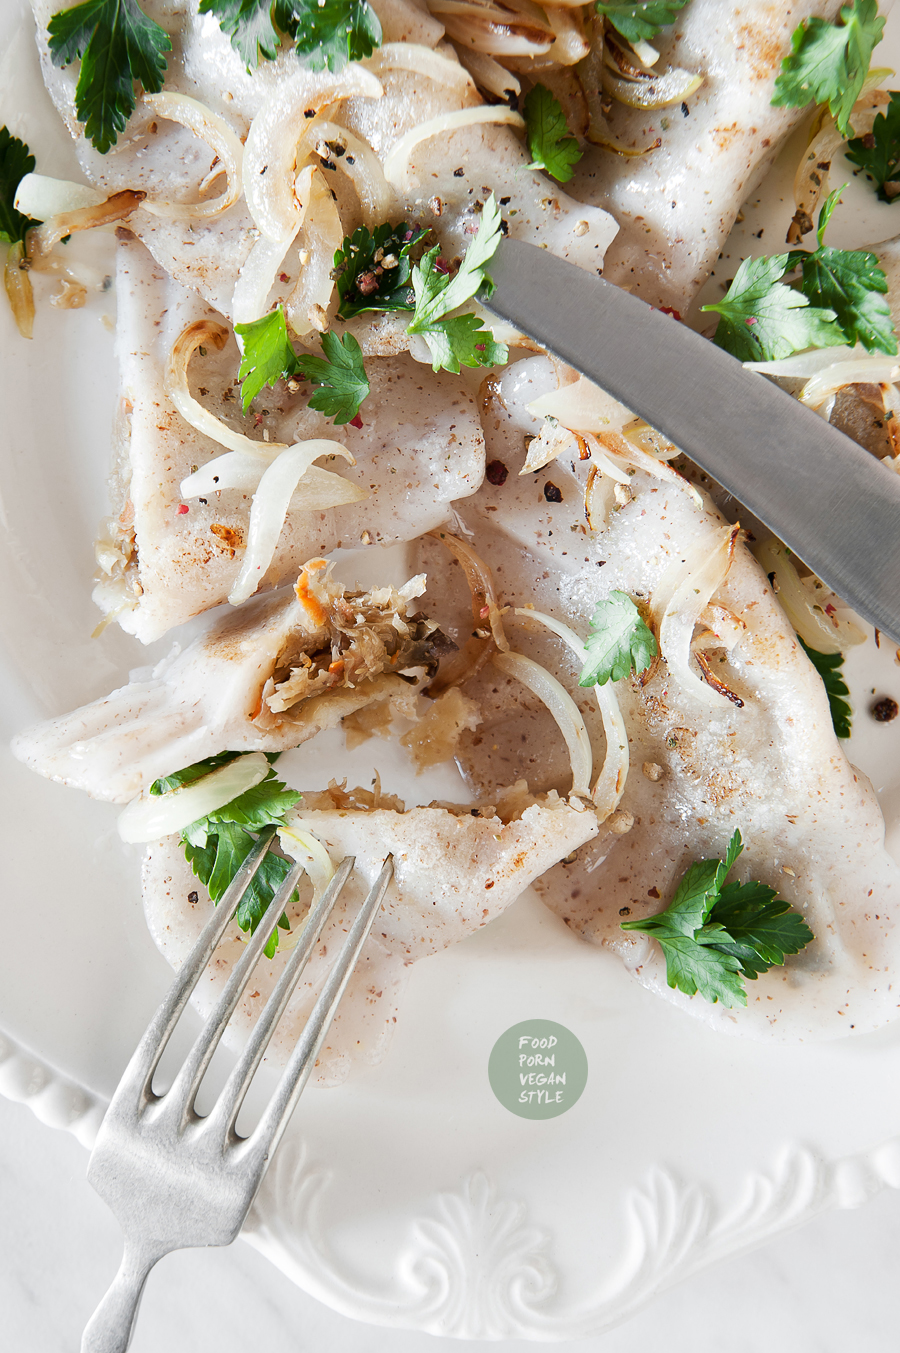 Gluten-free vegan polish style dumplings with sauerkraut and wild mushrooms